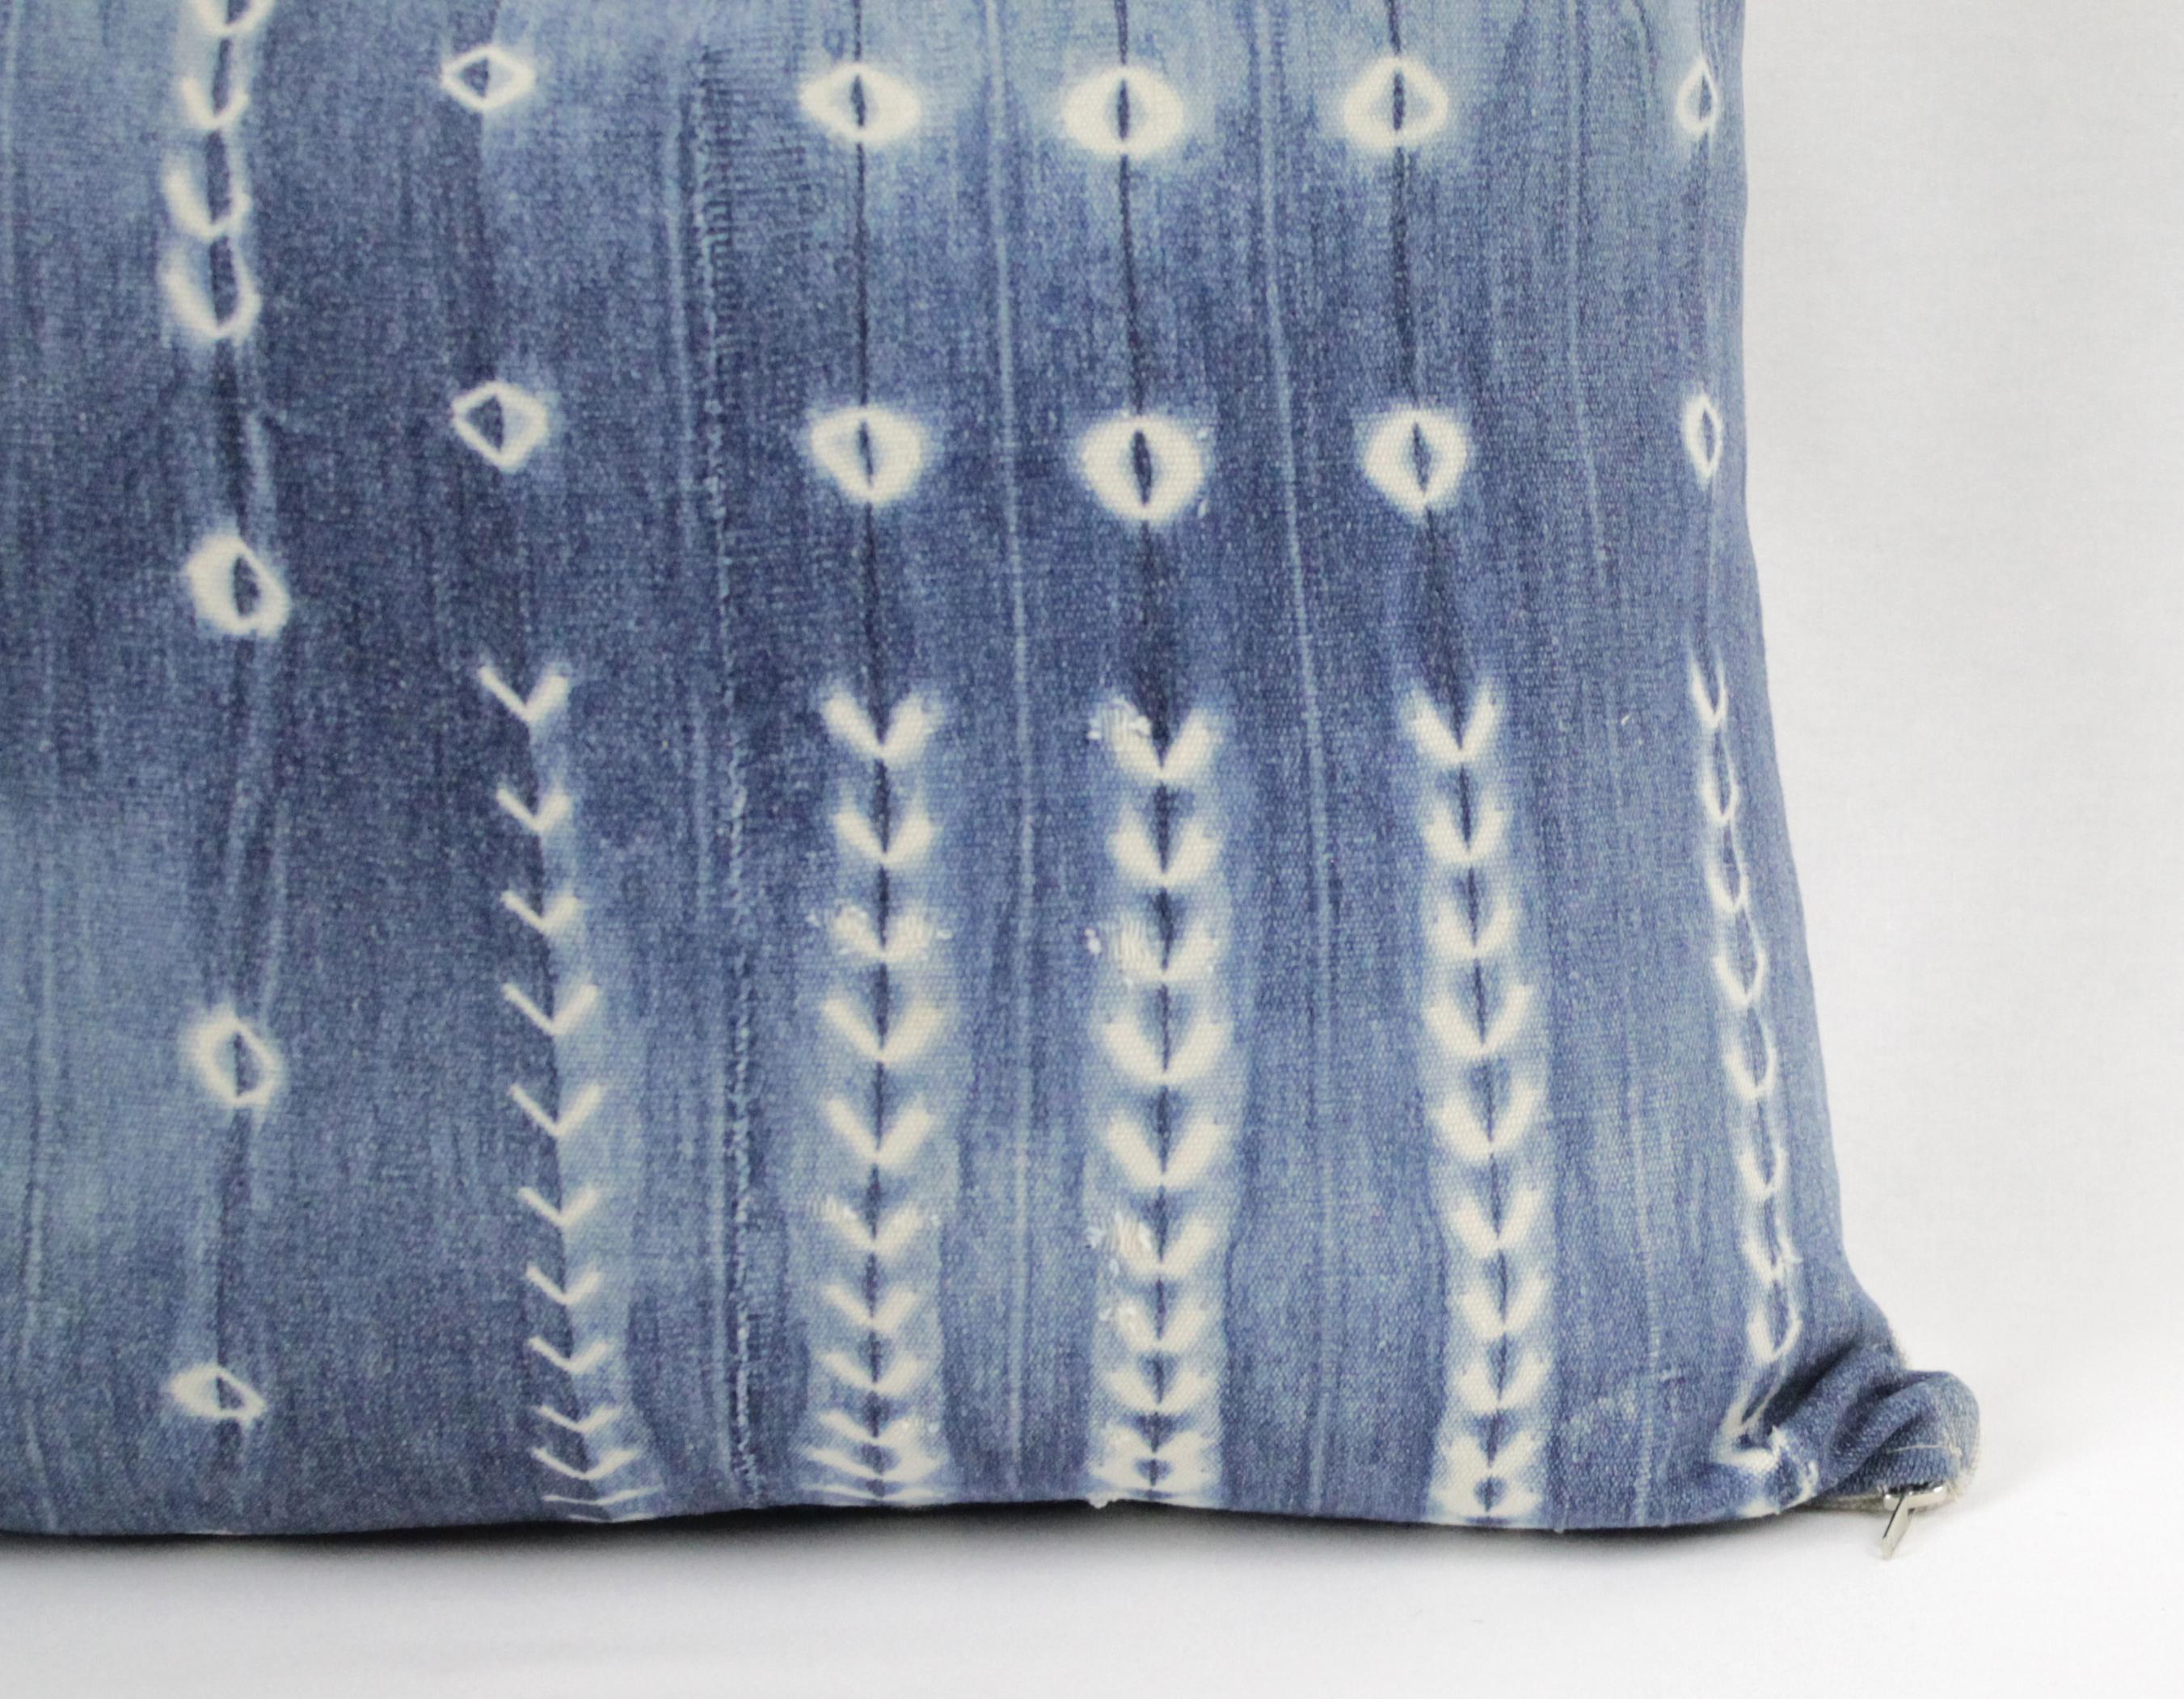 Vintage Blue and White Batik Style Pillows 7